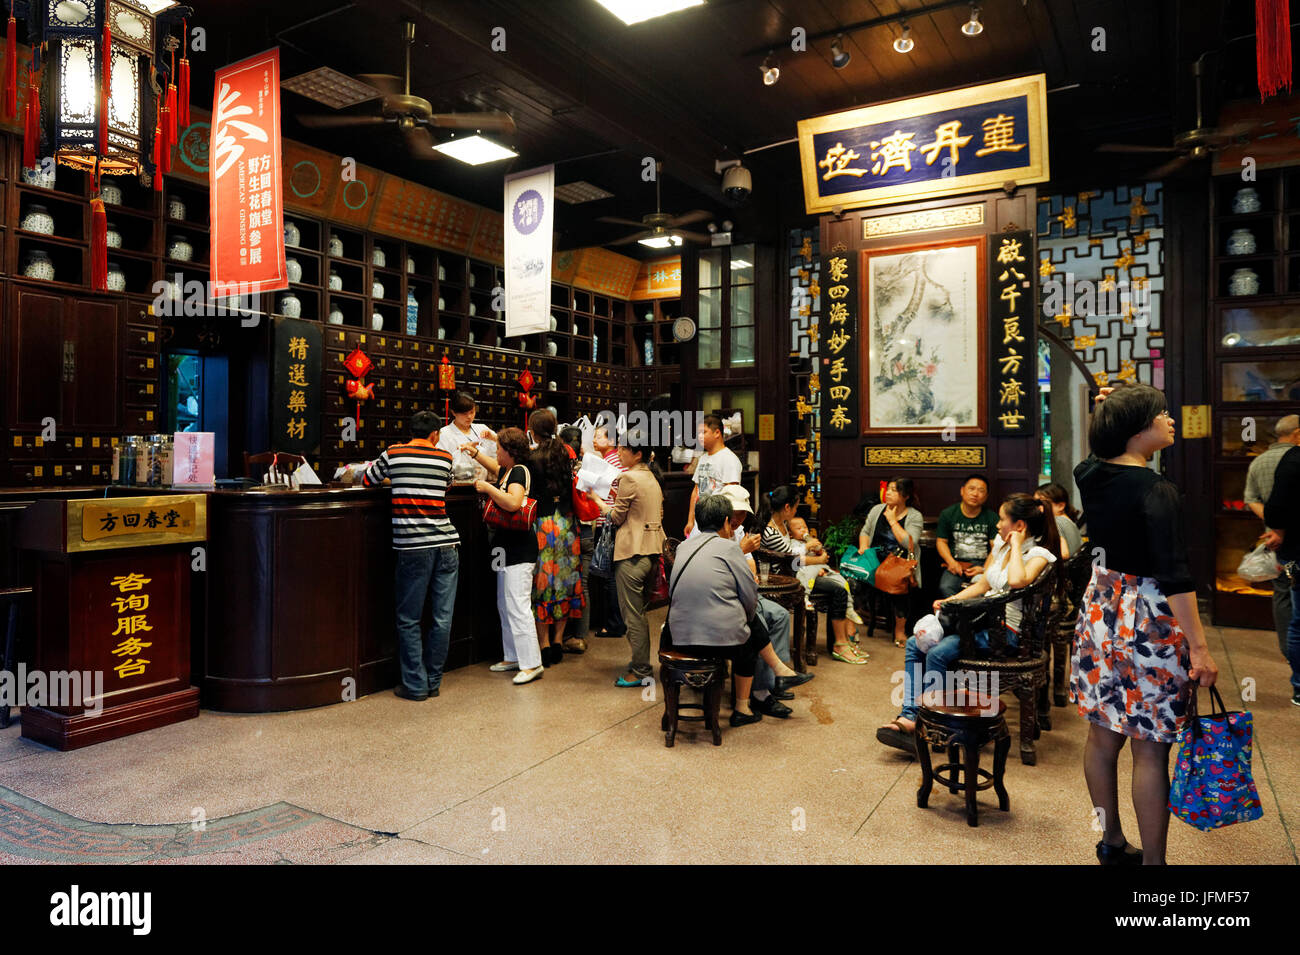 China, Zhejiang Province, Hangzhou, Huqingyu Tang traditional drugstore dating 1874 and still in action Stock Photo